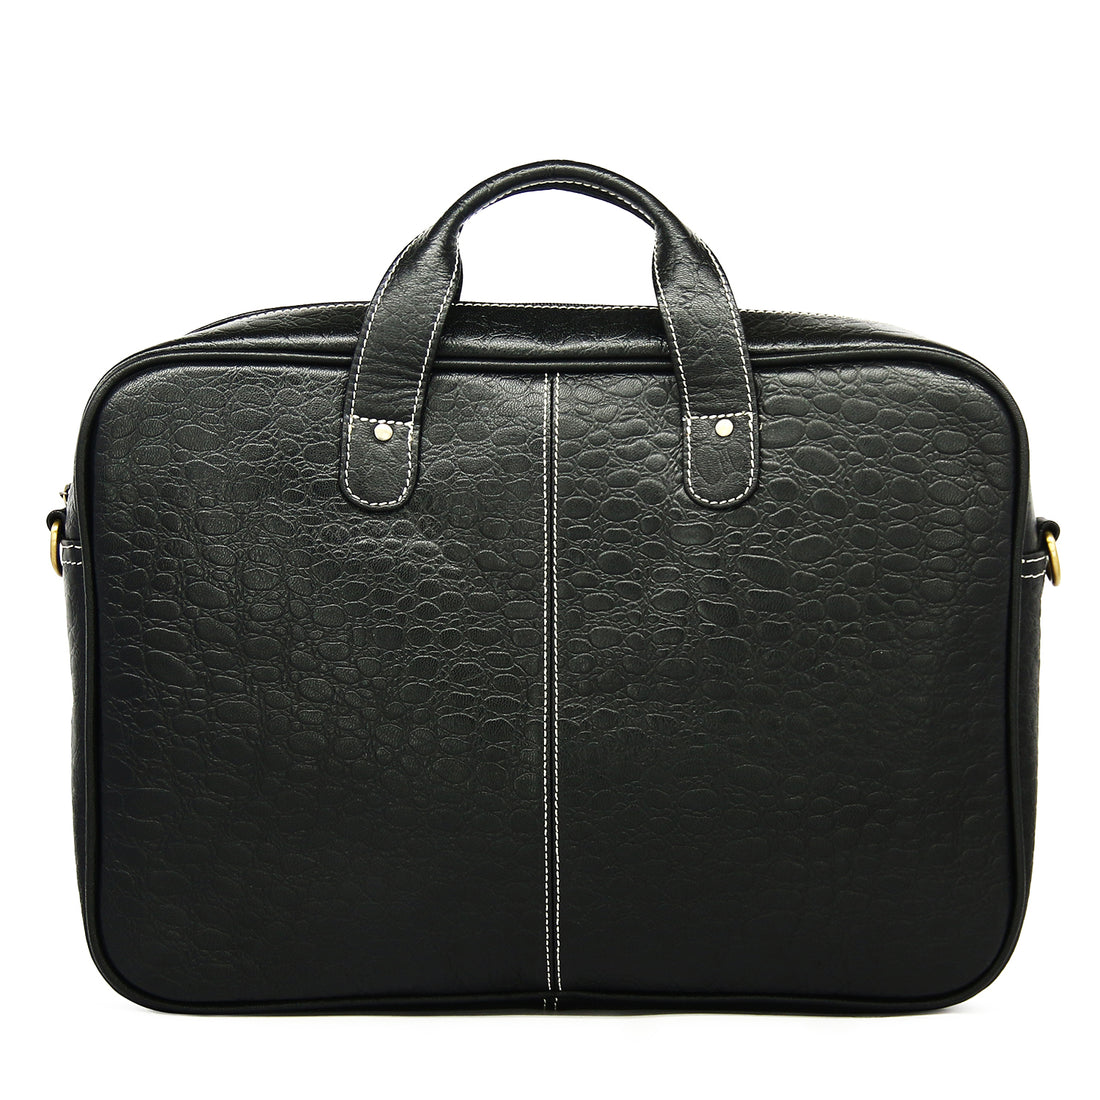 Hemener Black Croc Pattern Genuine Leather Laptop Bag